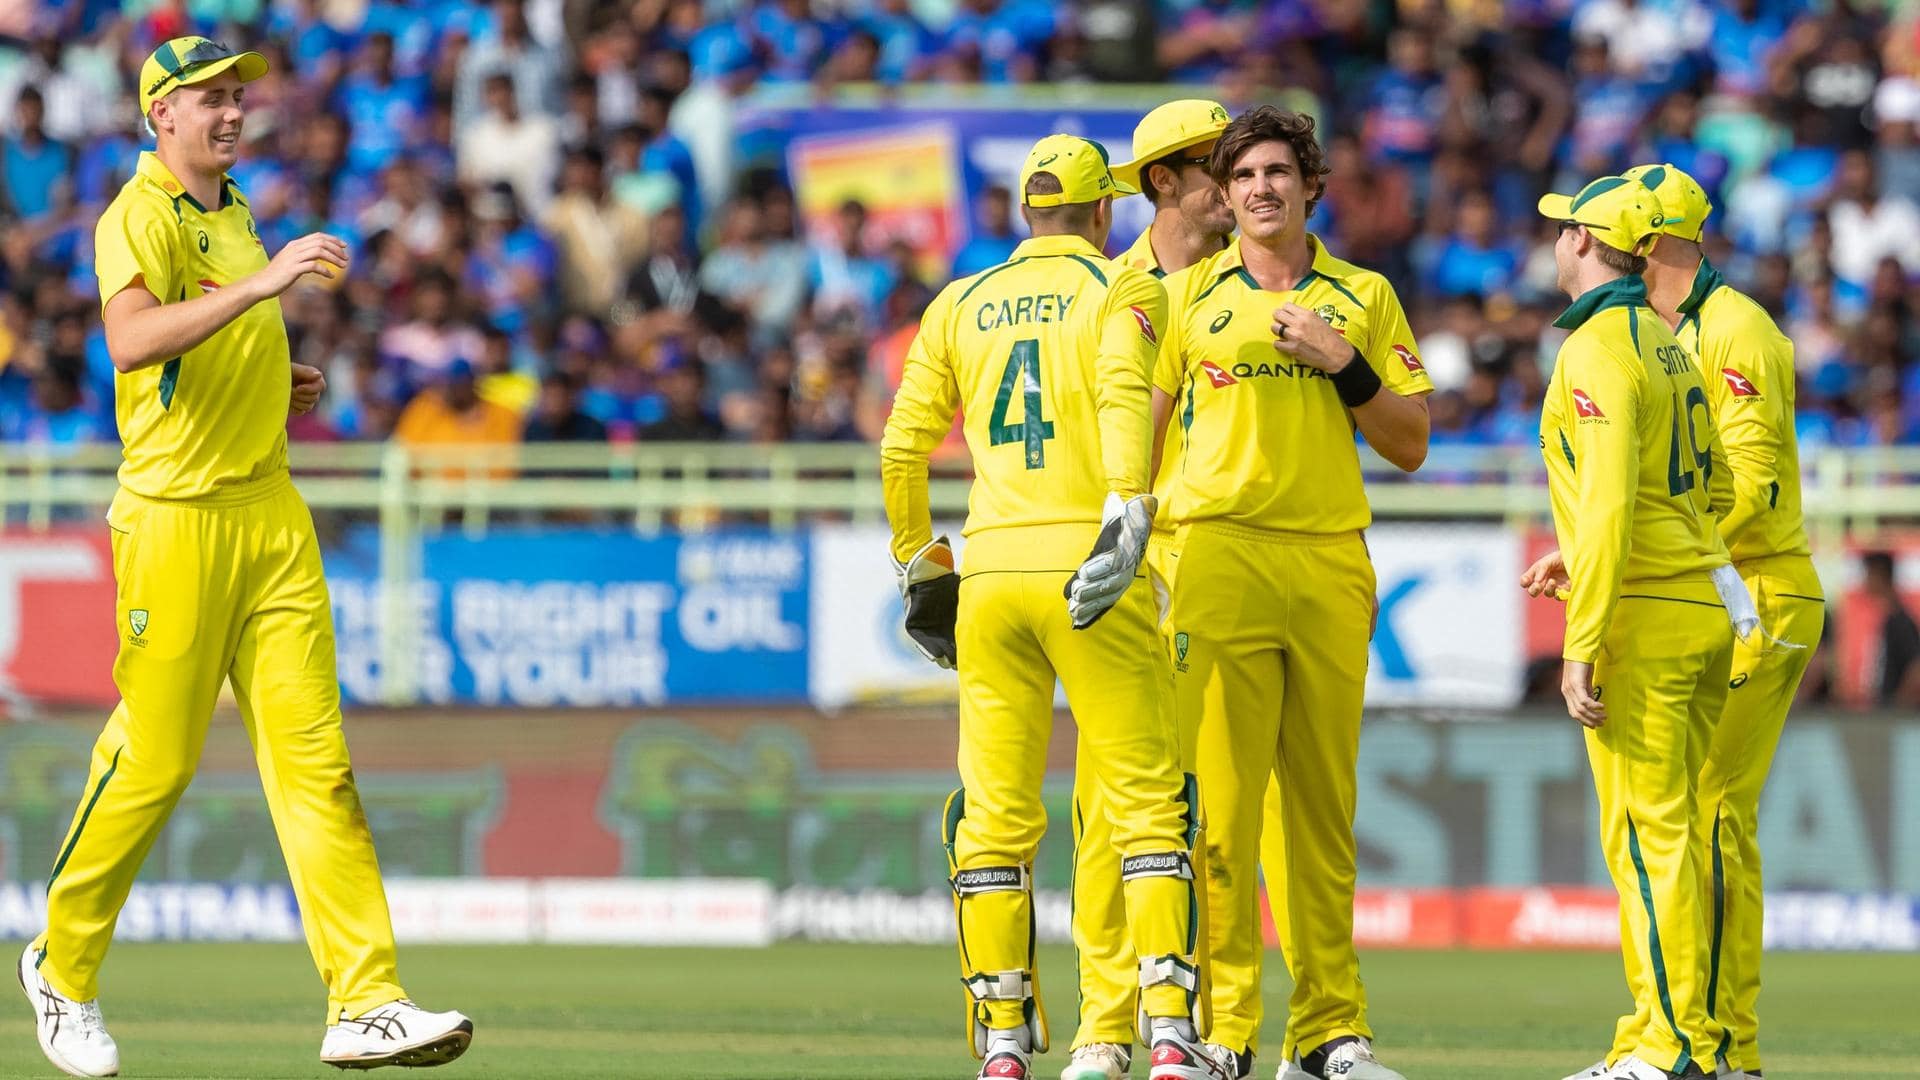 India vs Australia, 3rd ODI: Steve Smith elects to bat